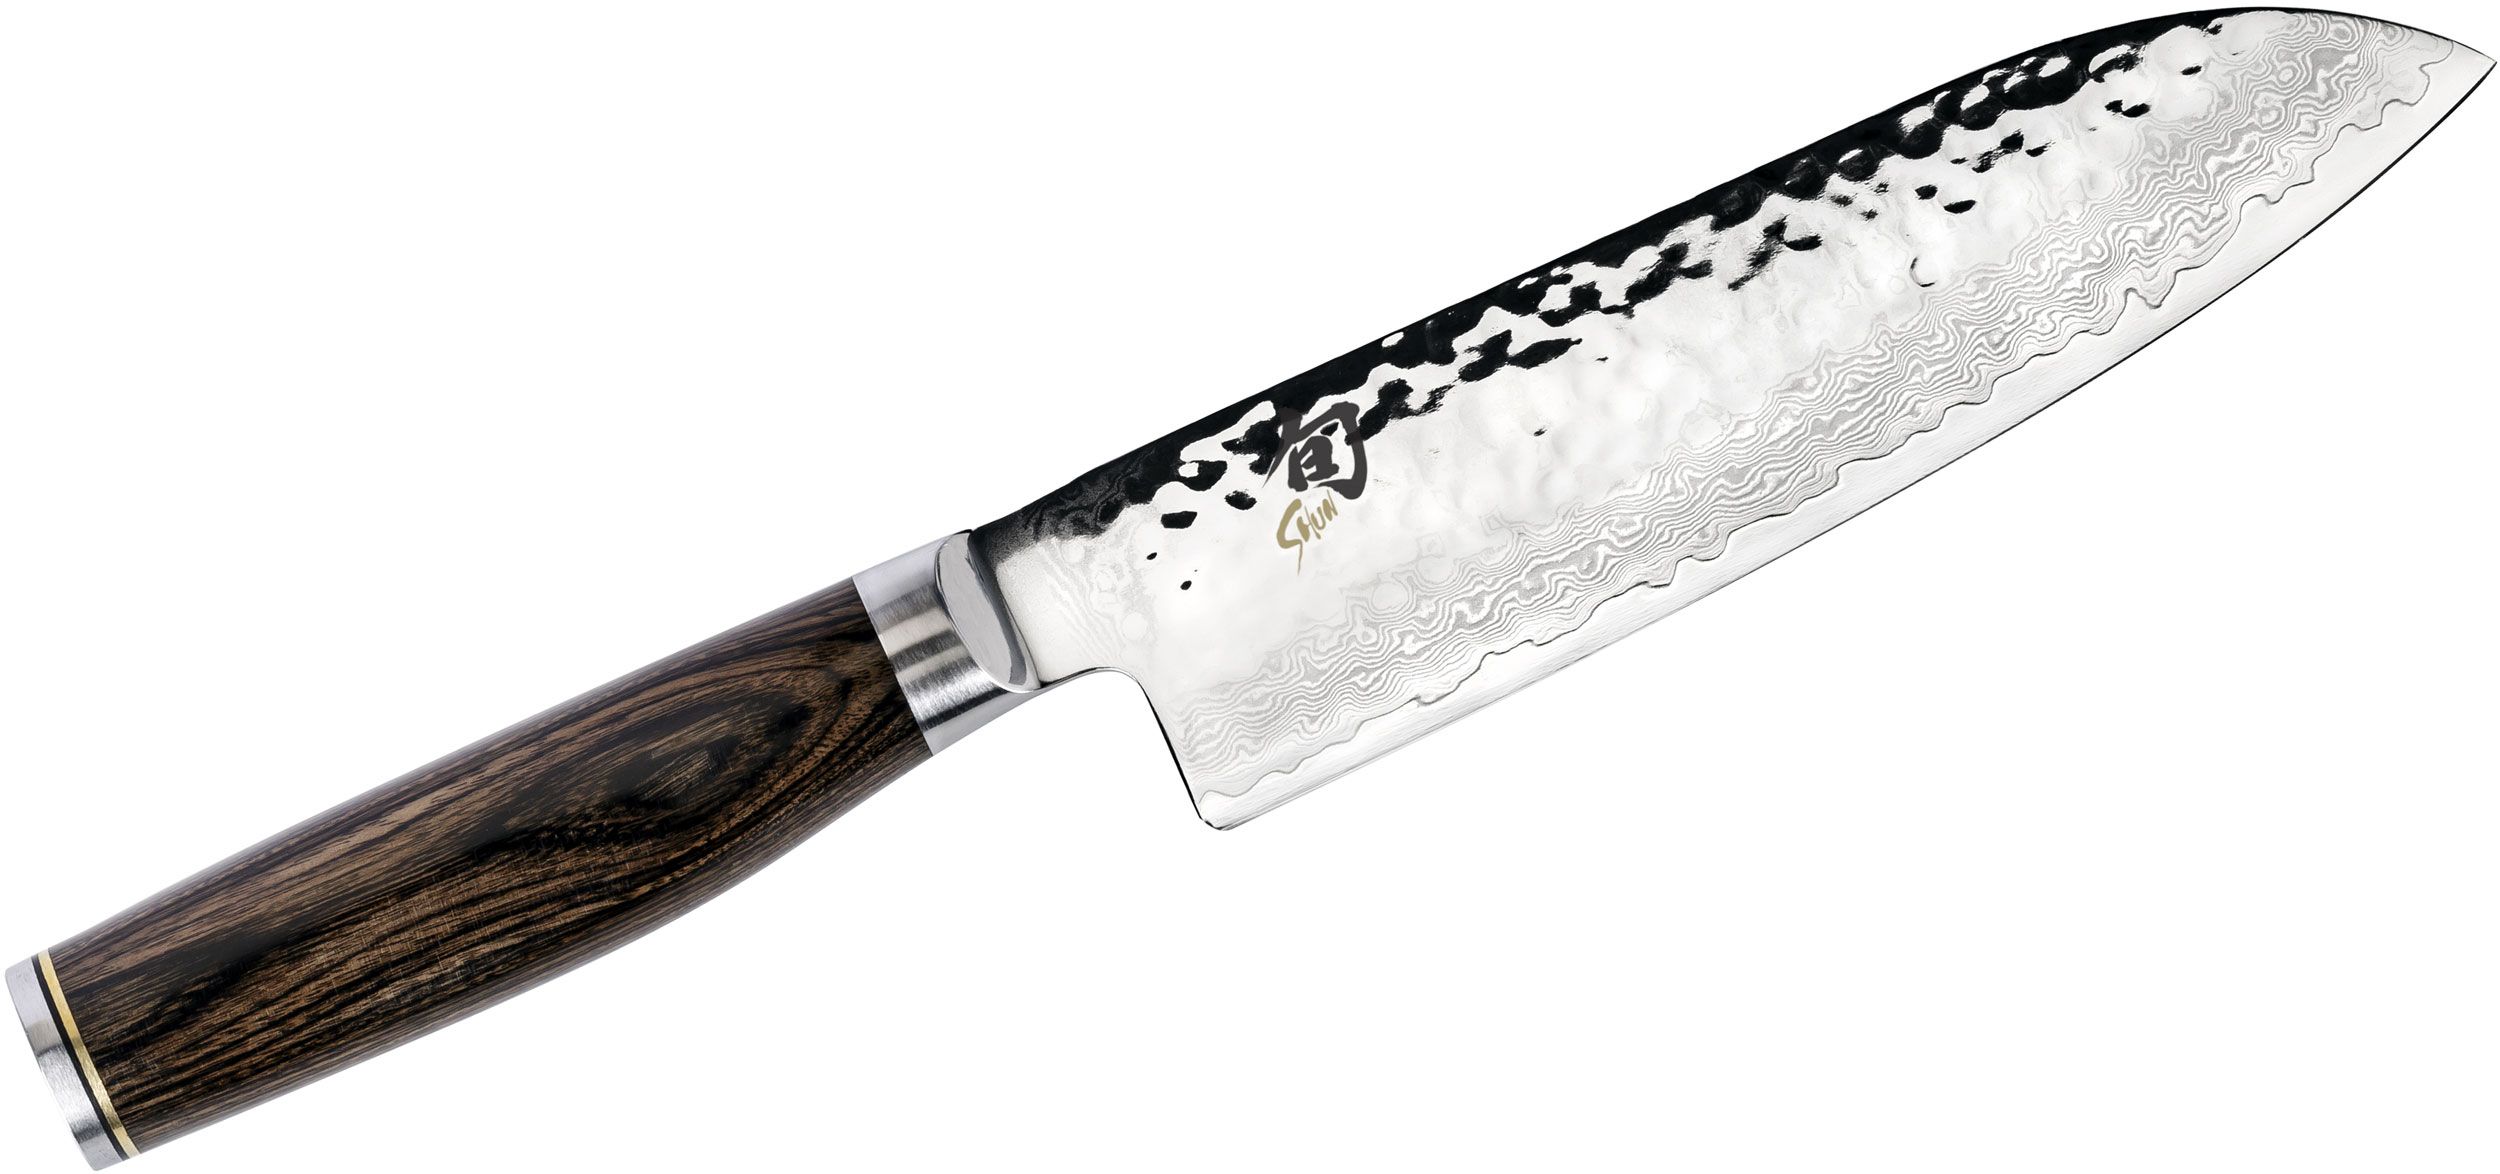 Shun Premier 7-Inch Santoku Knife and Kai Retractable Knife Sharpener Set